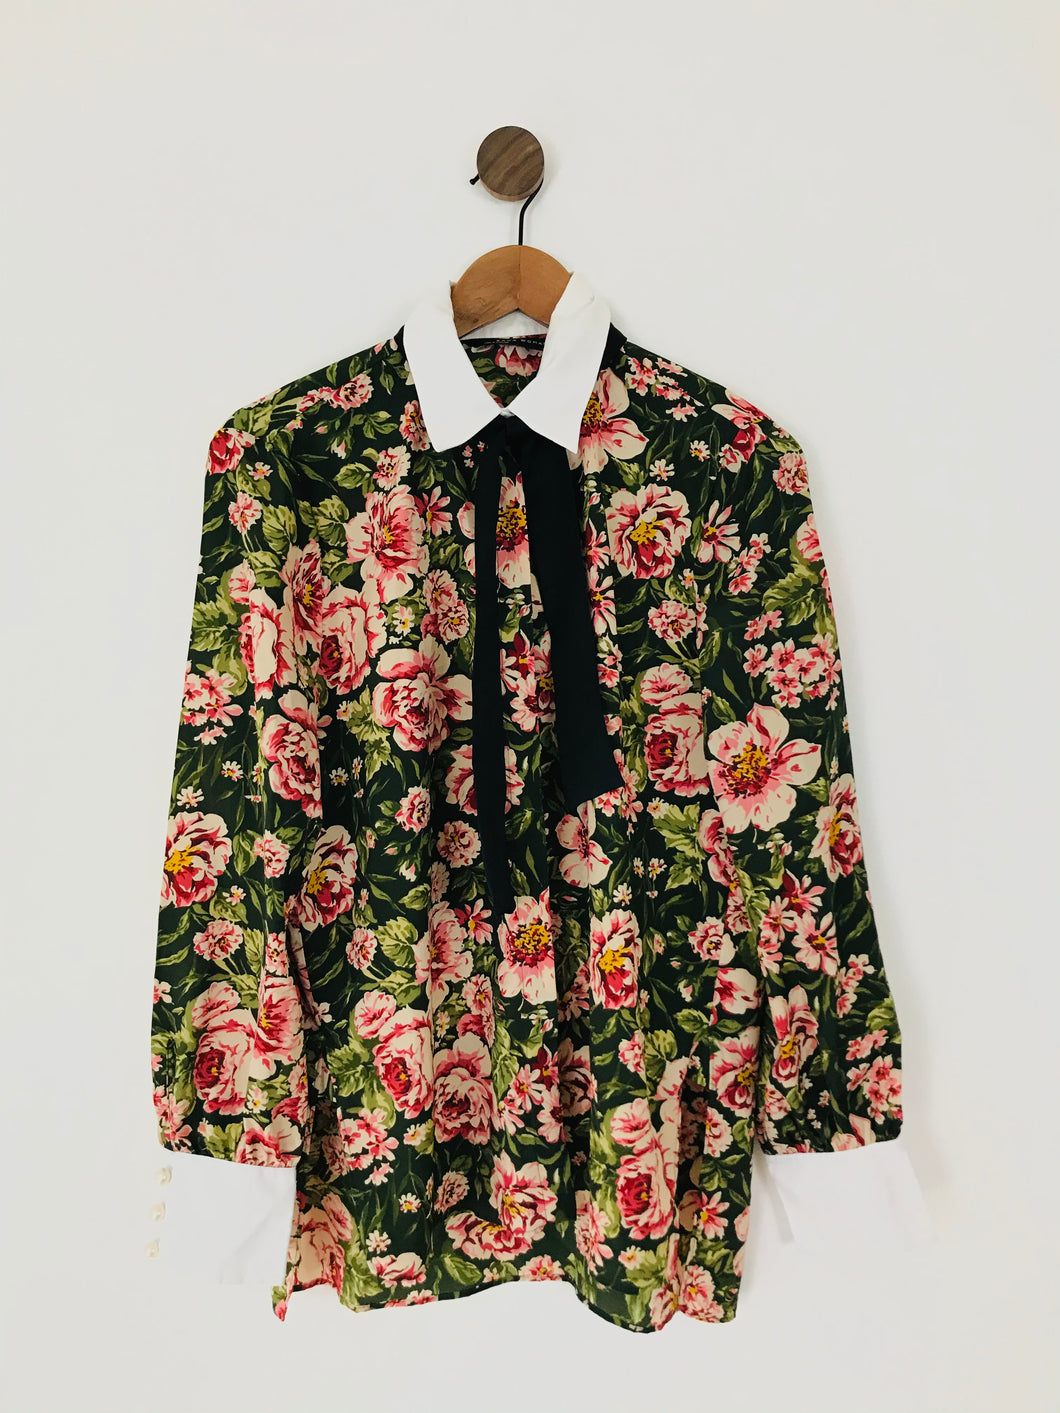 Zara Women’s Floral Tie Blouse Shirt | L UK14 | Green Pink